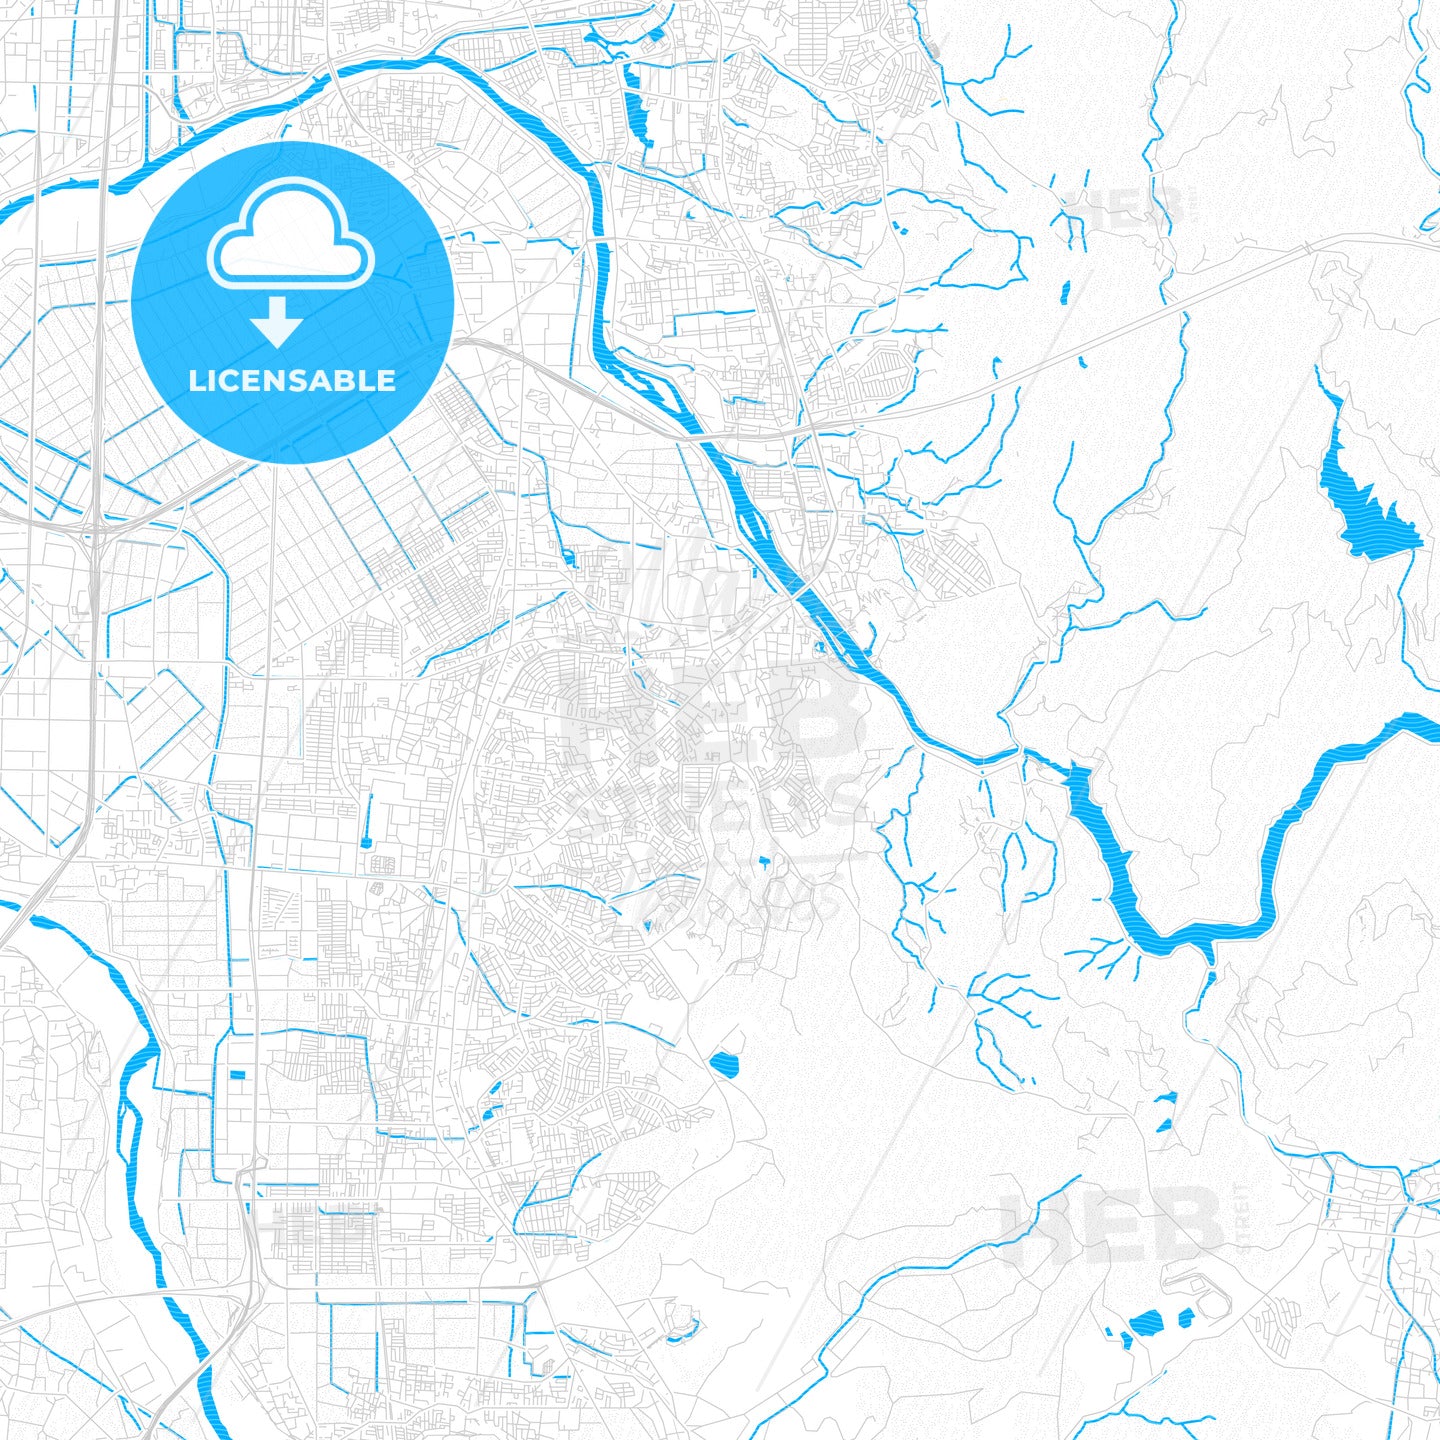 Uji, Japan PDF vector map with water in focus